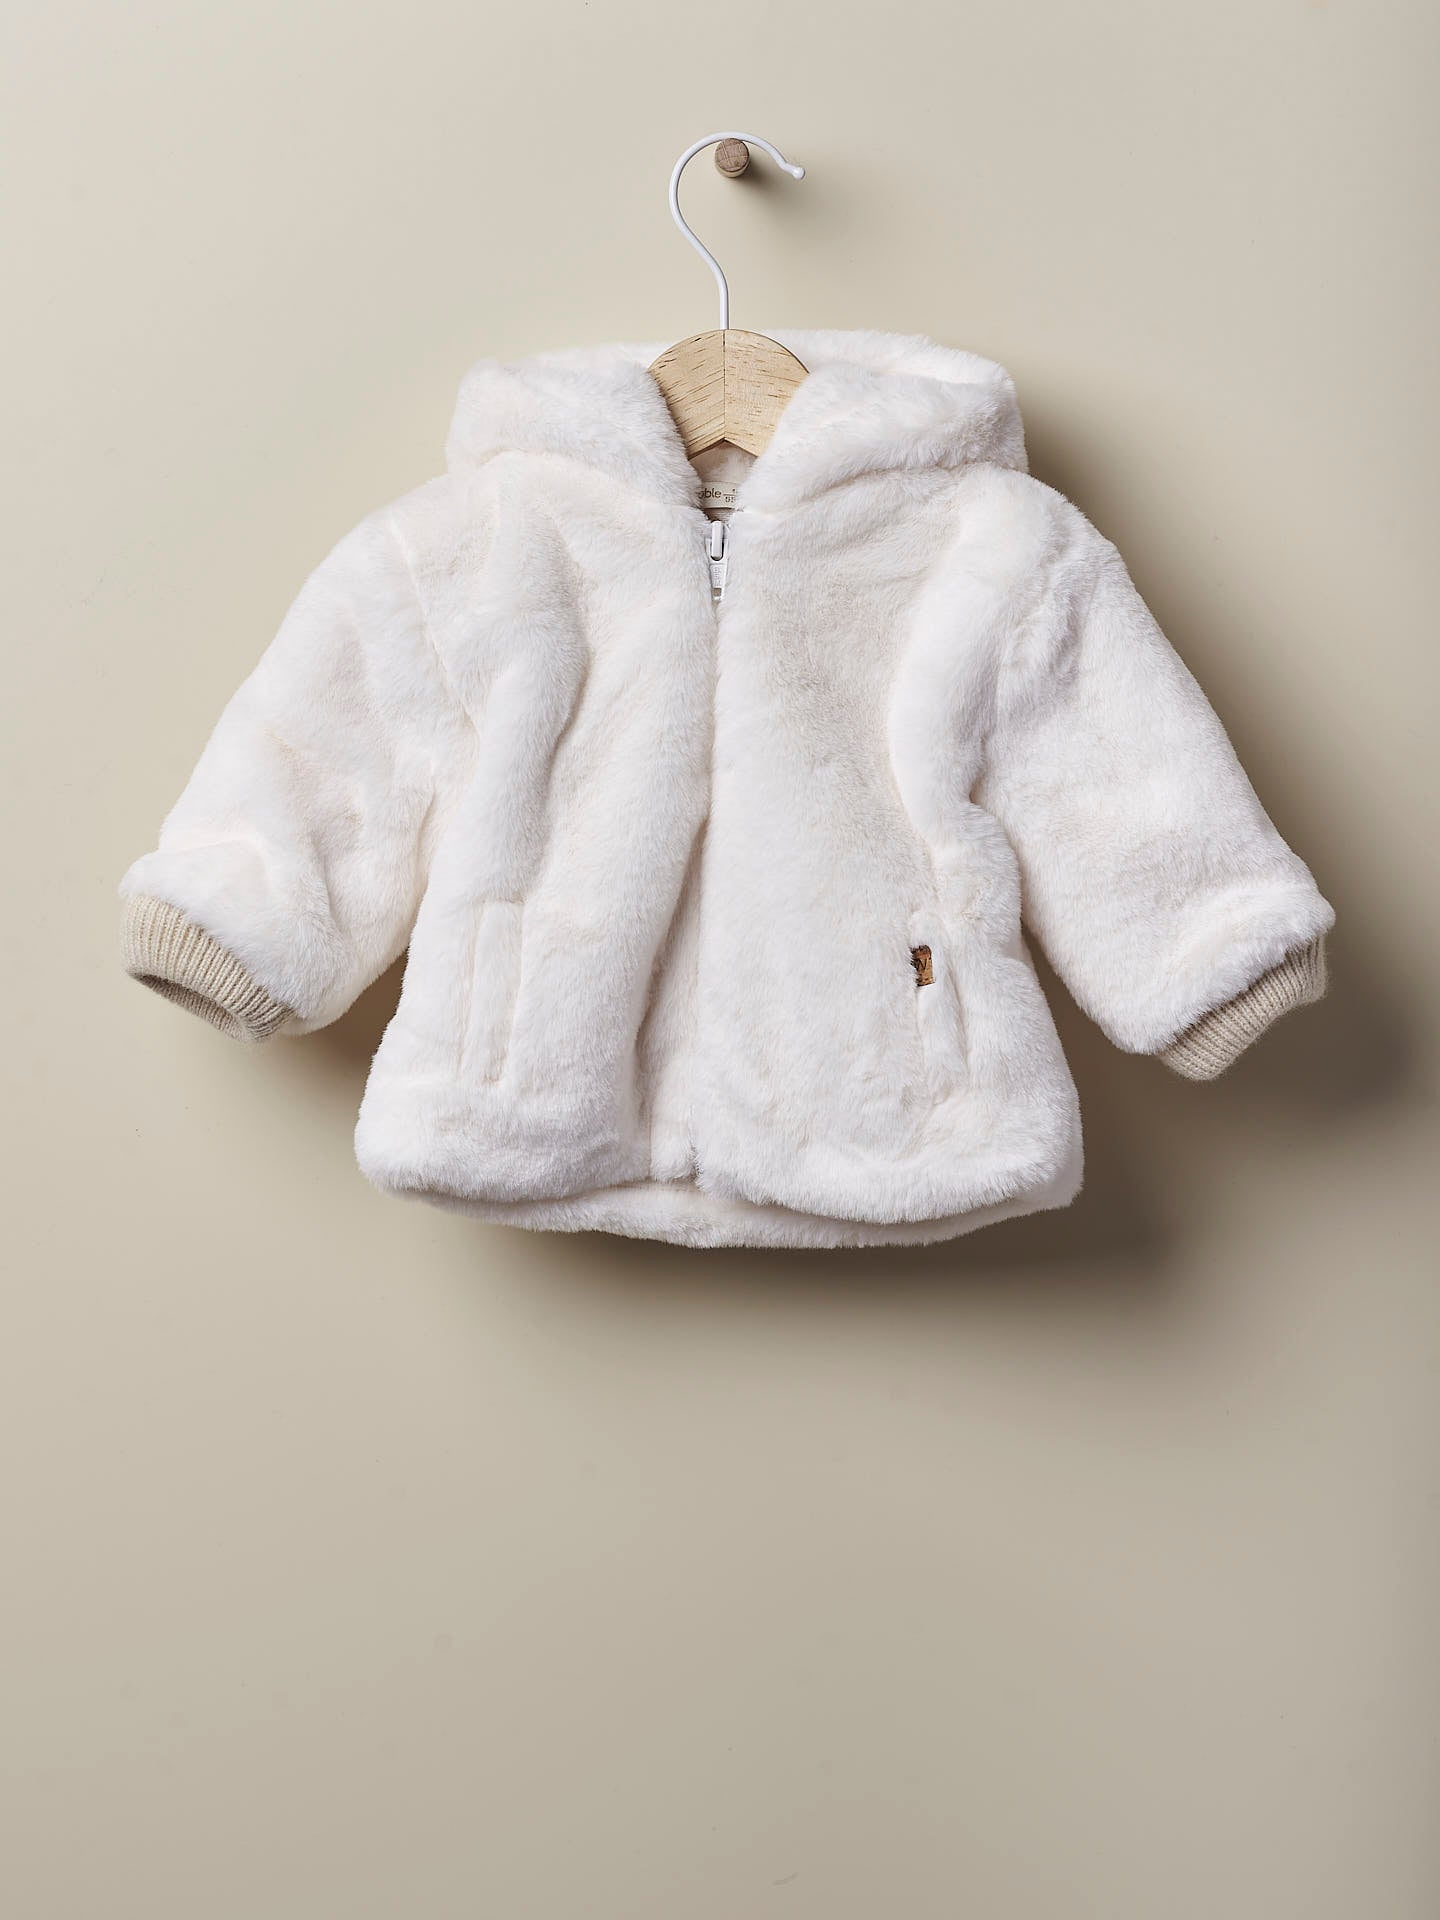 WEDOBLE Fur Coat Offwhite